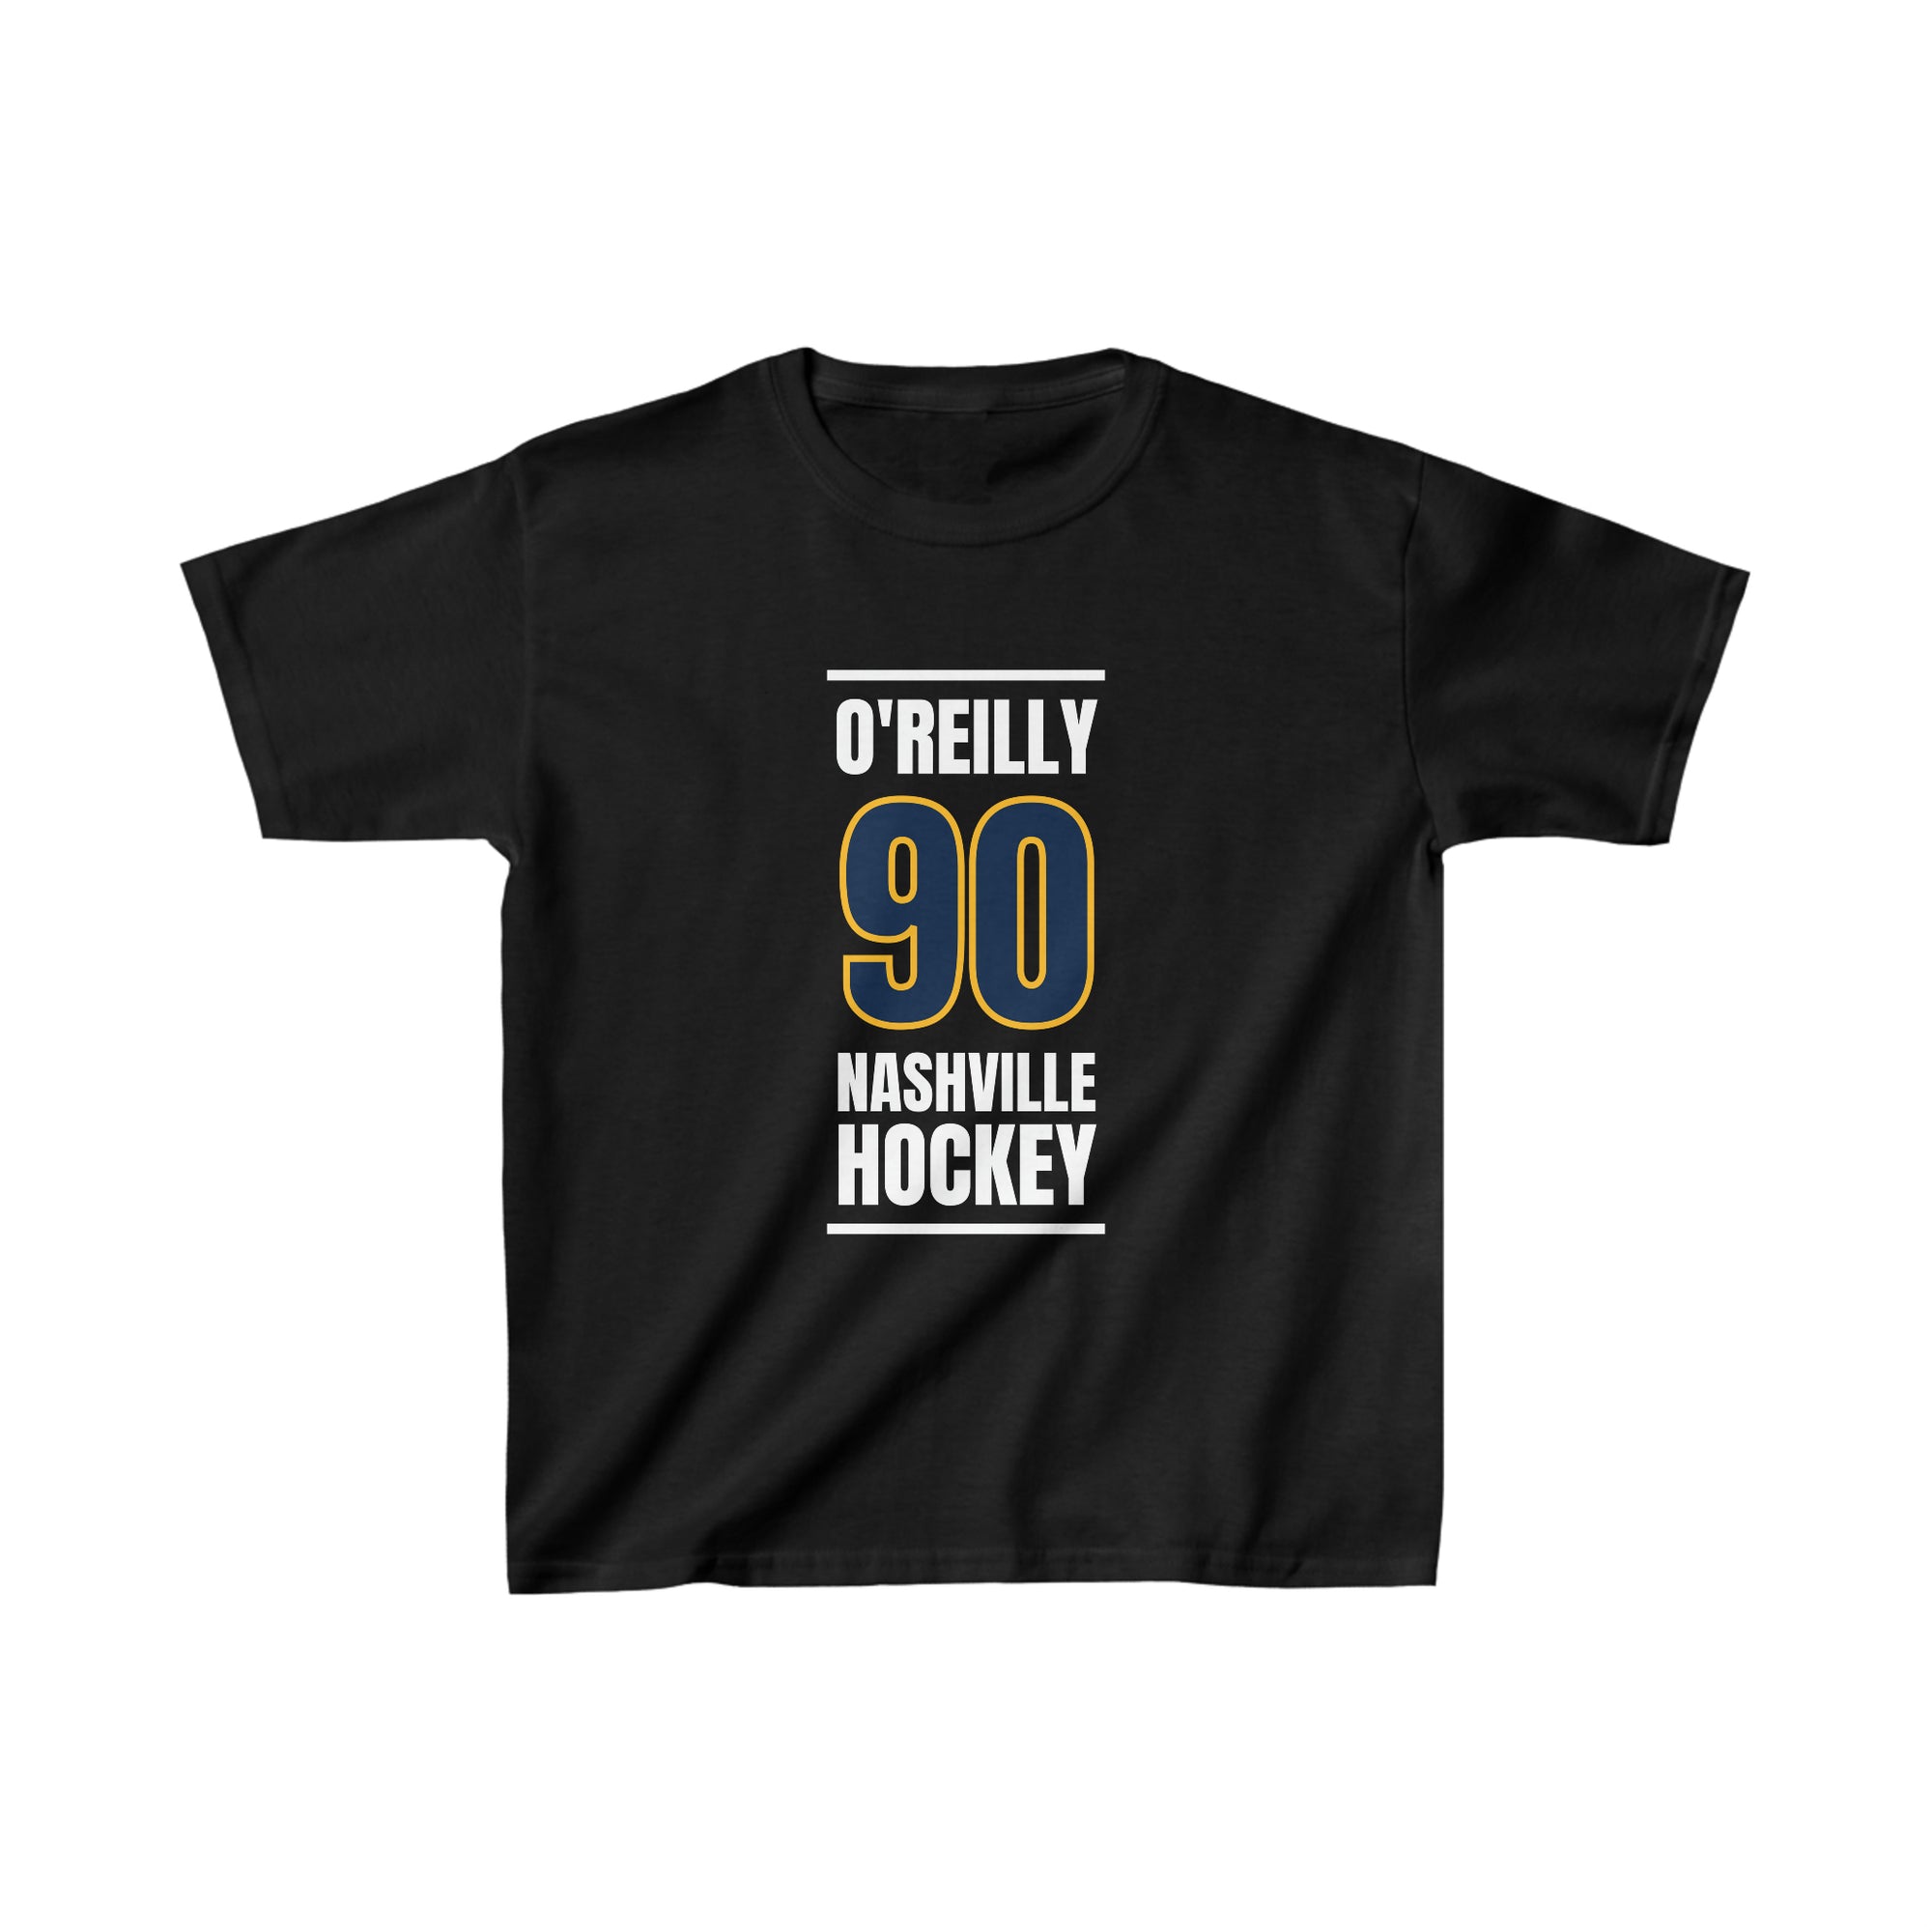 O'Reilly 90 Nashville Hockey Navy Blue Vertical Design Kids Tee